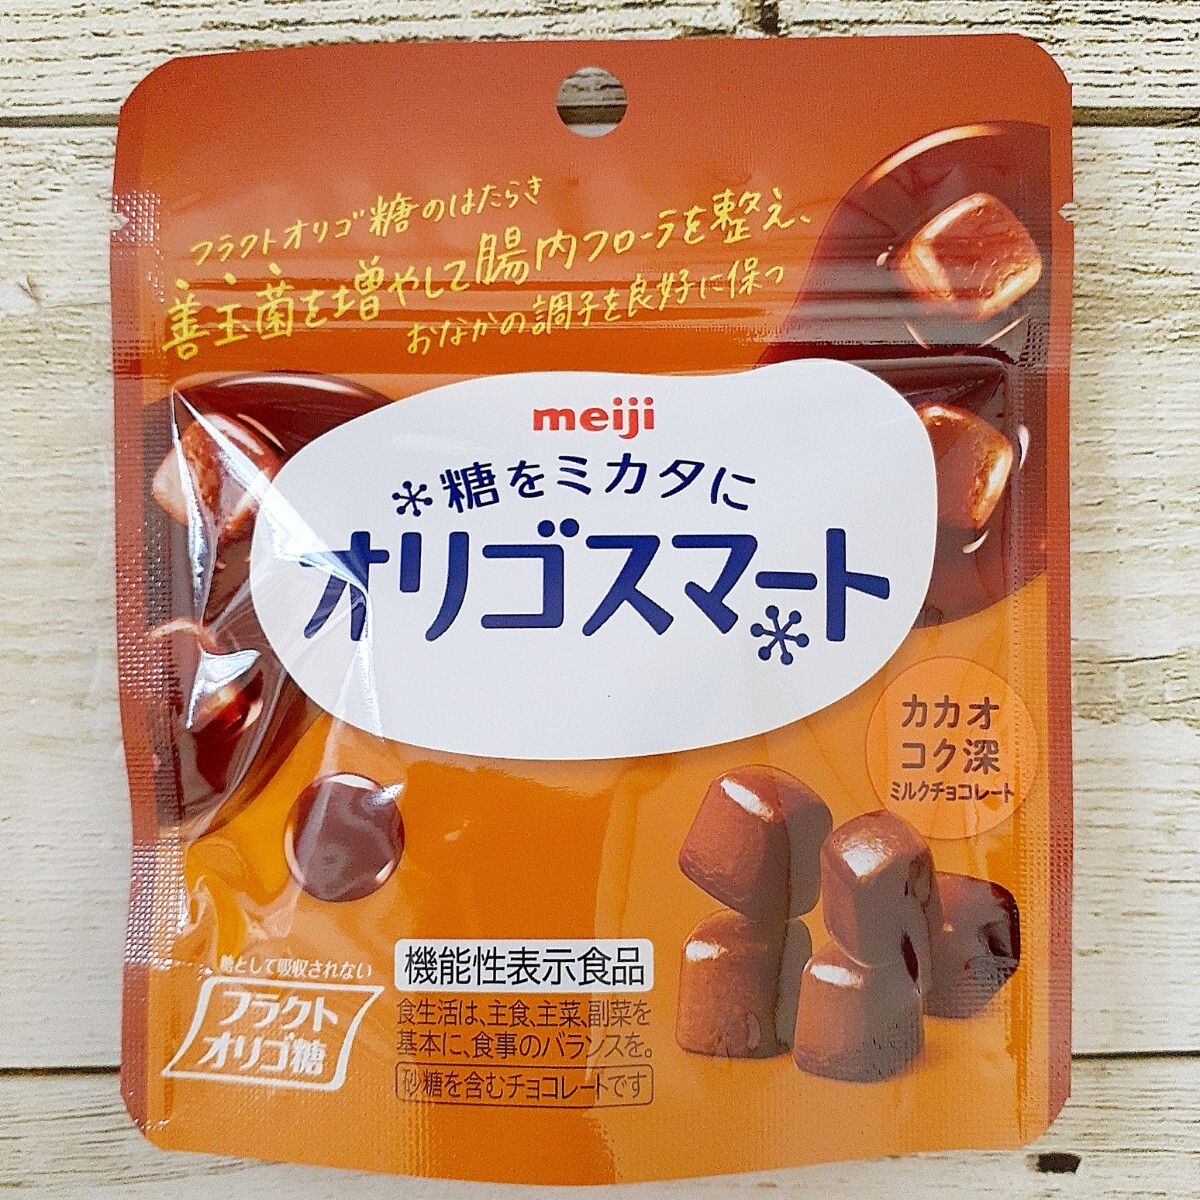 oligo Smart pauchikakaokok deep milk chocolate 10 sack (1 sack 32g) functionality display food 